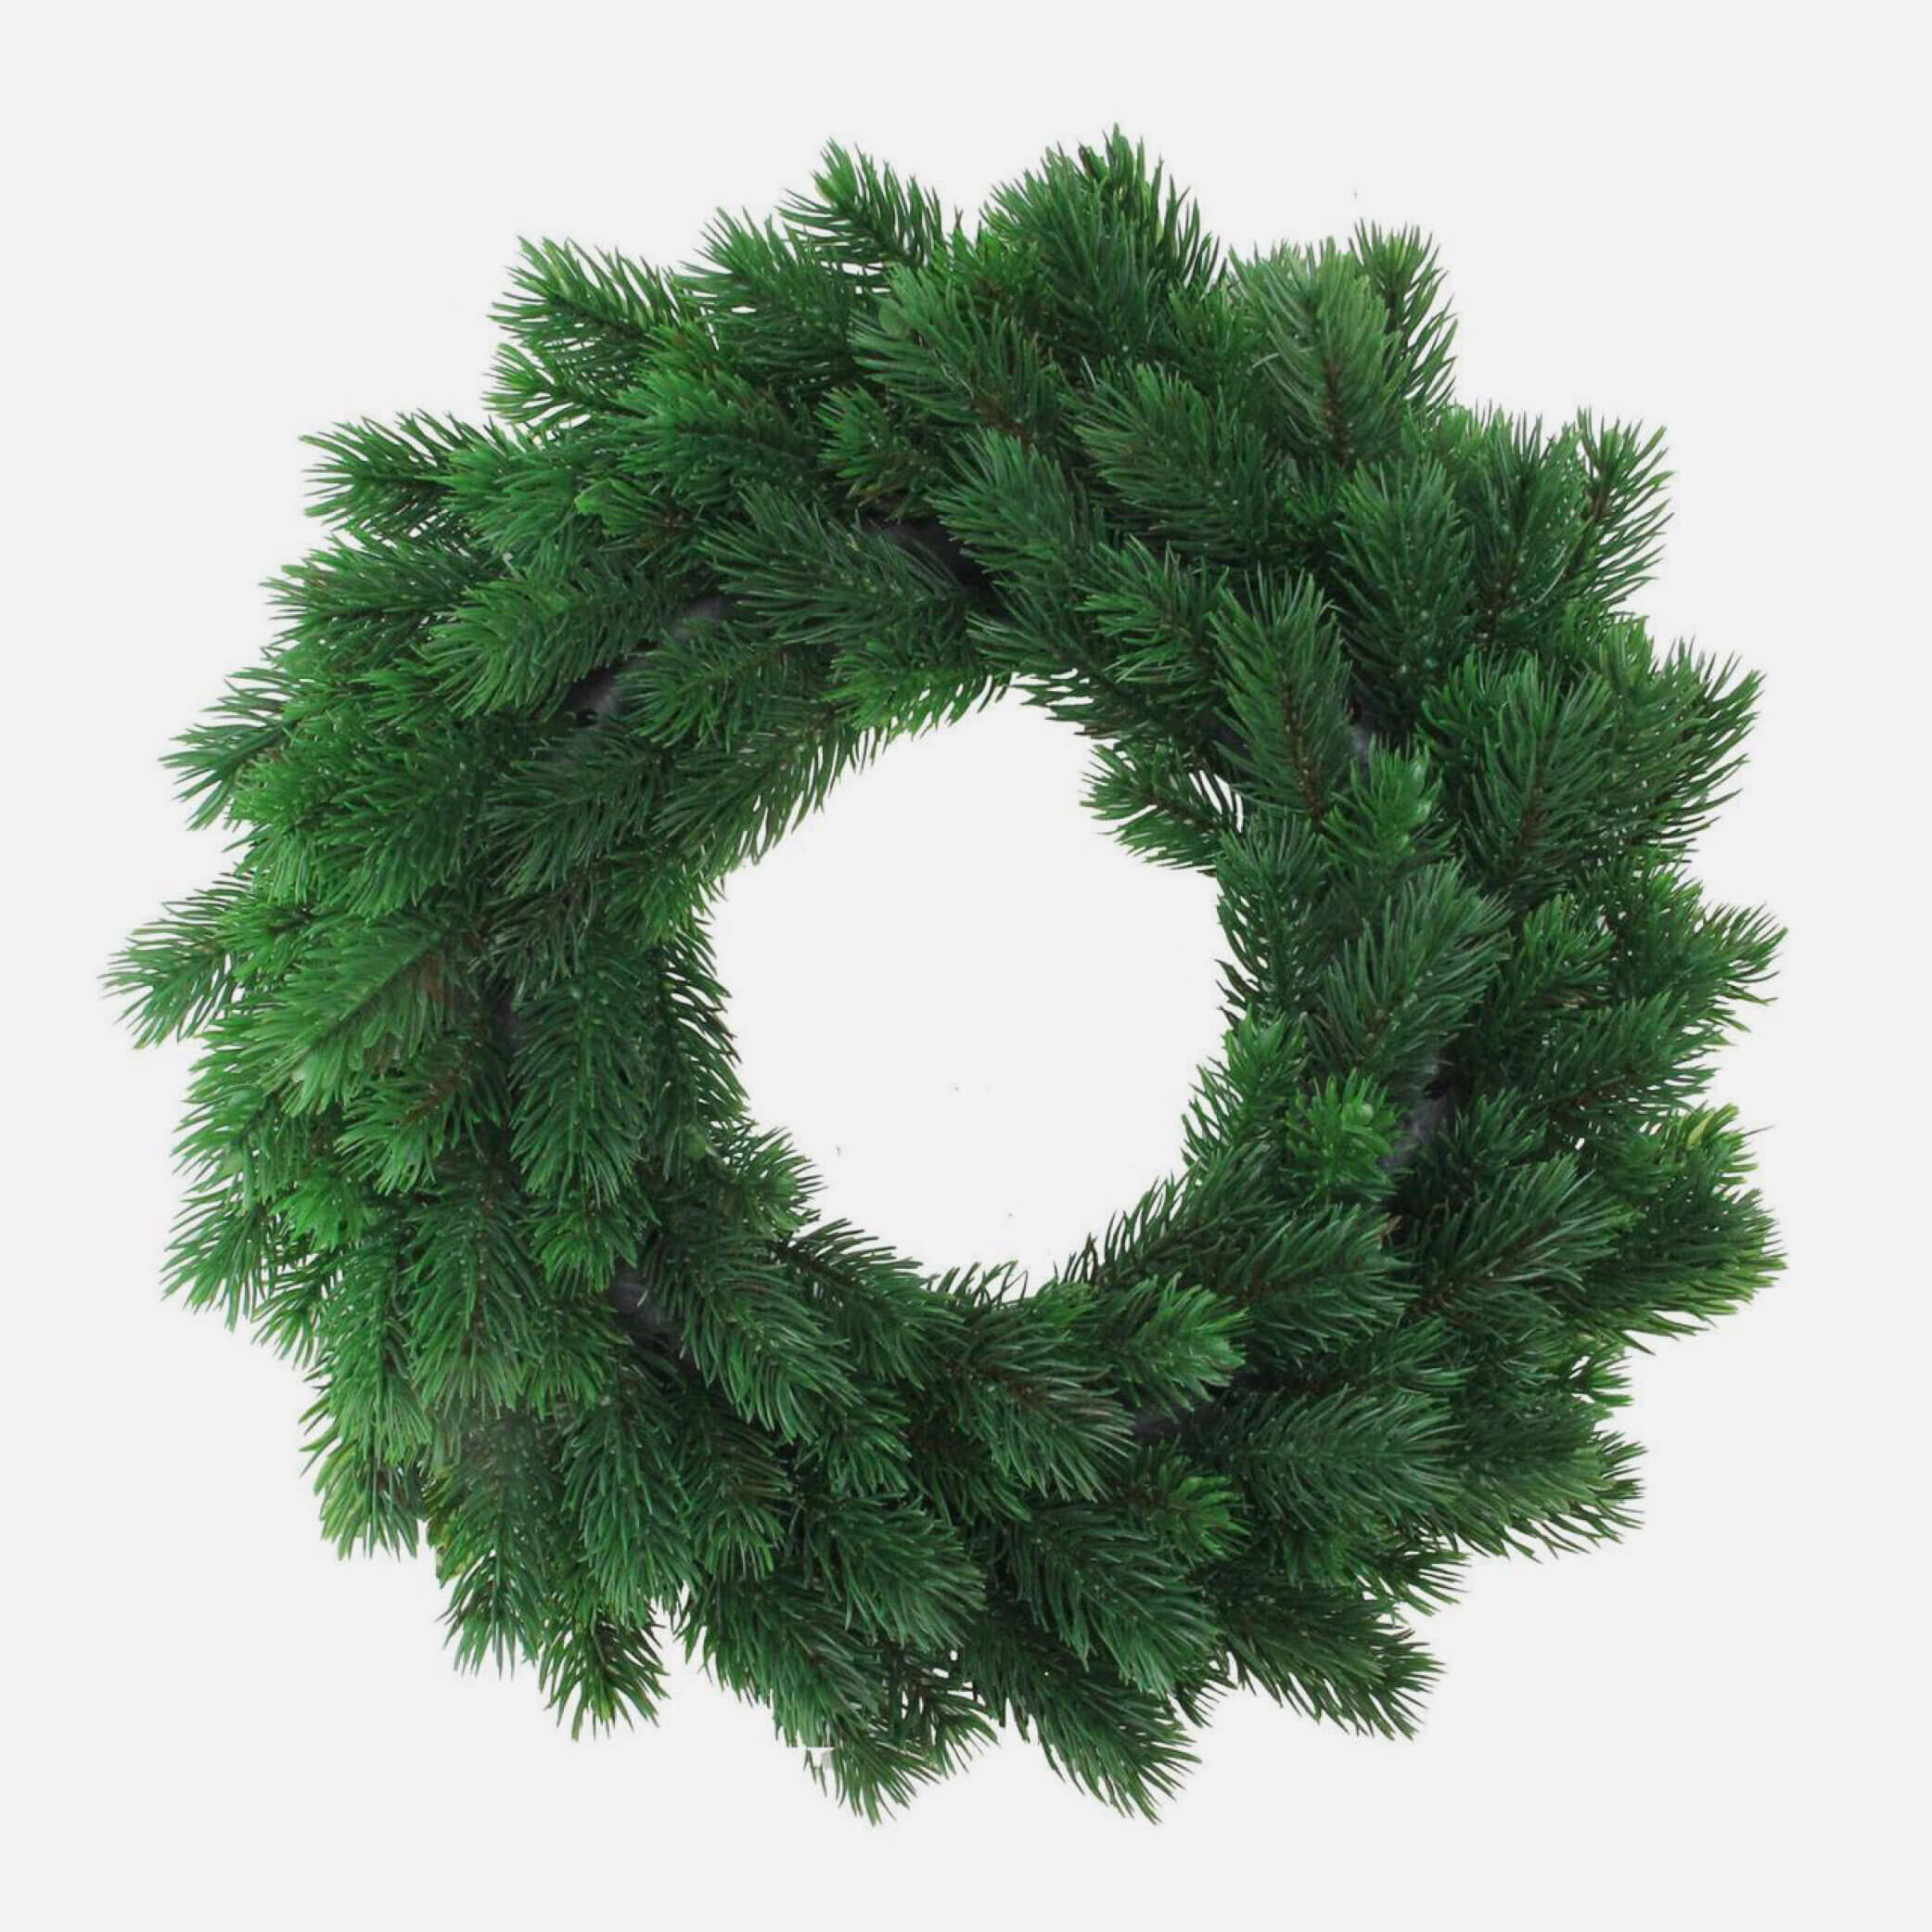 Artificial wreath